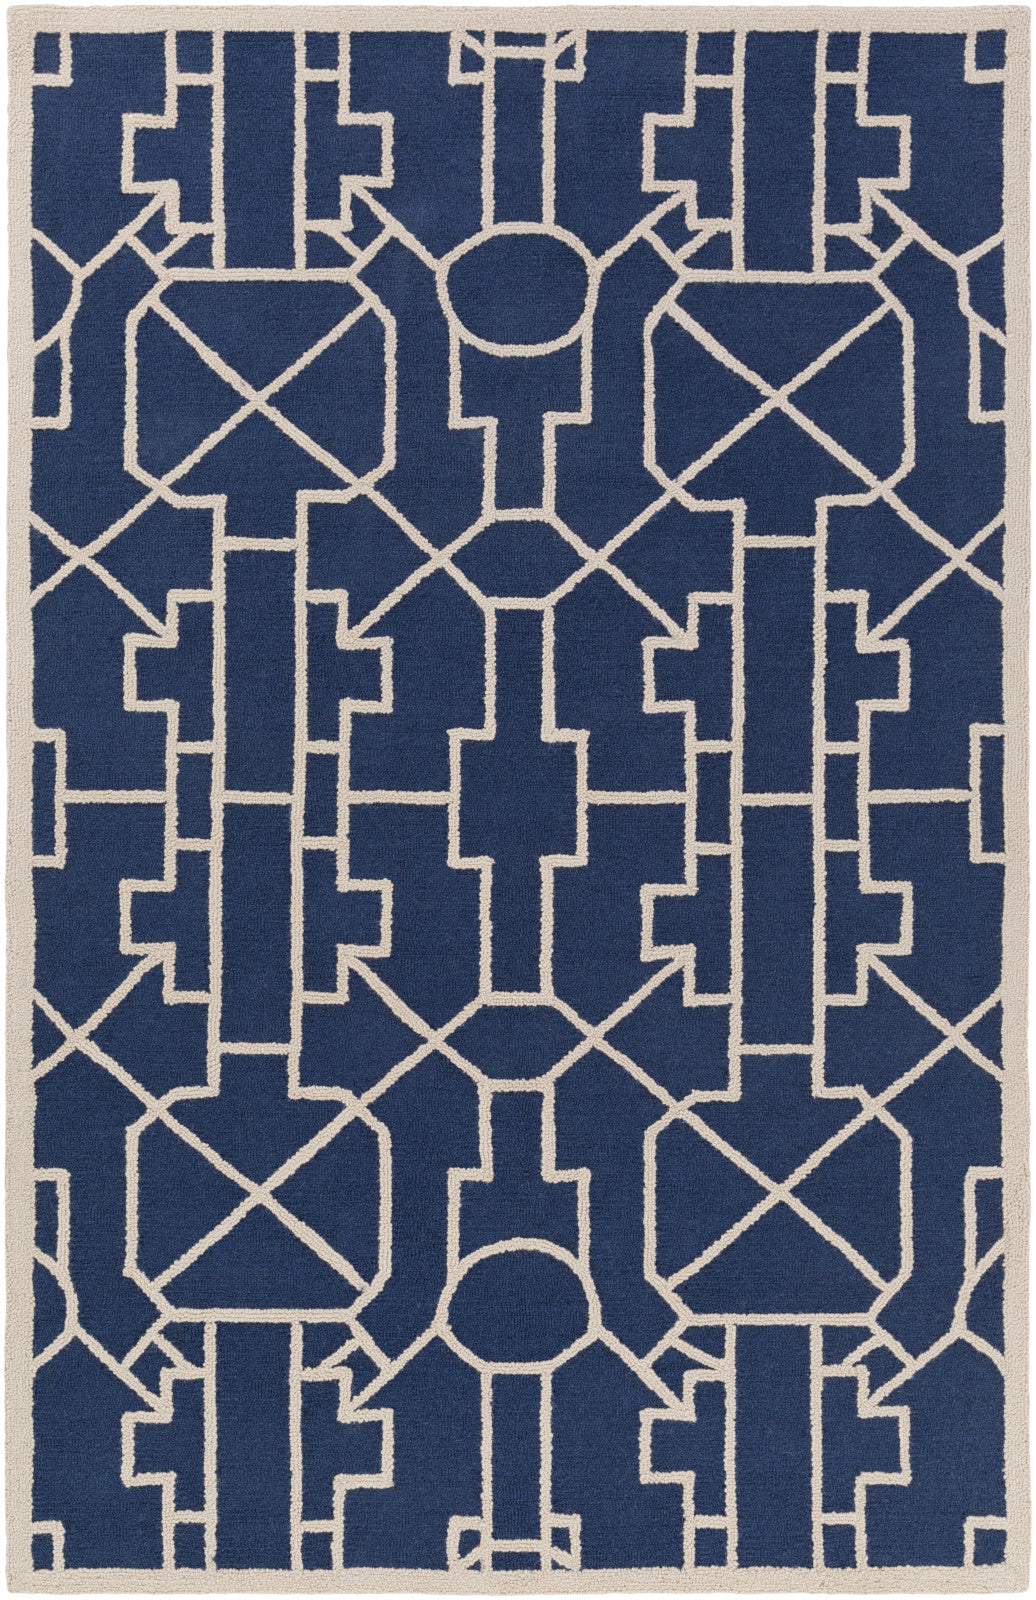 Artistic Weavers Marigold Leighton Navy Blue/Ivory Area Rug main image